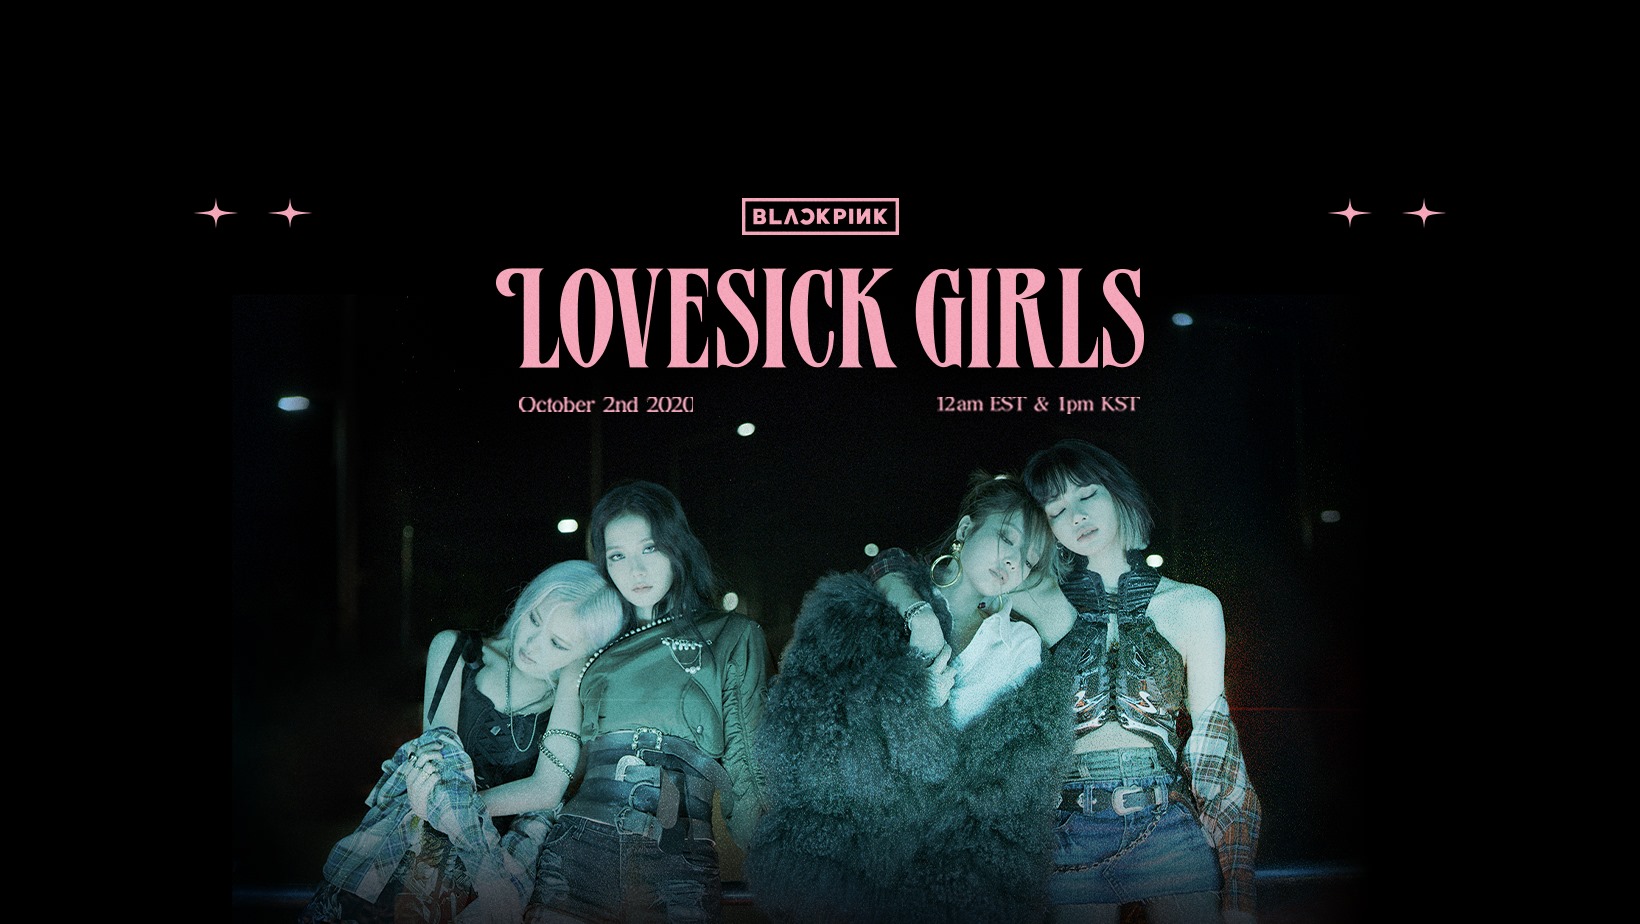 BLACKPINK TikTok - Lovesick Girls